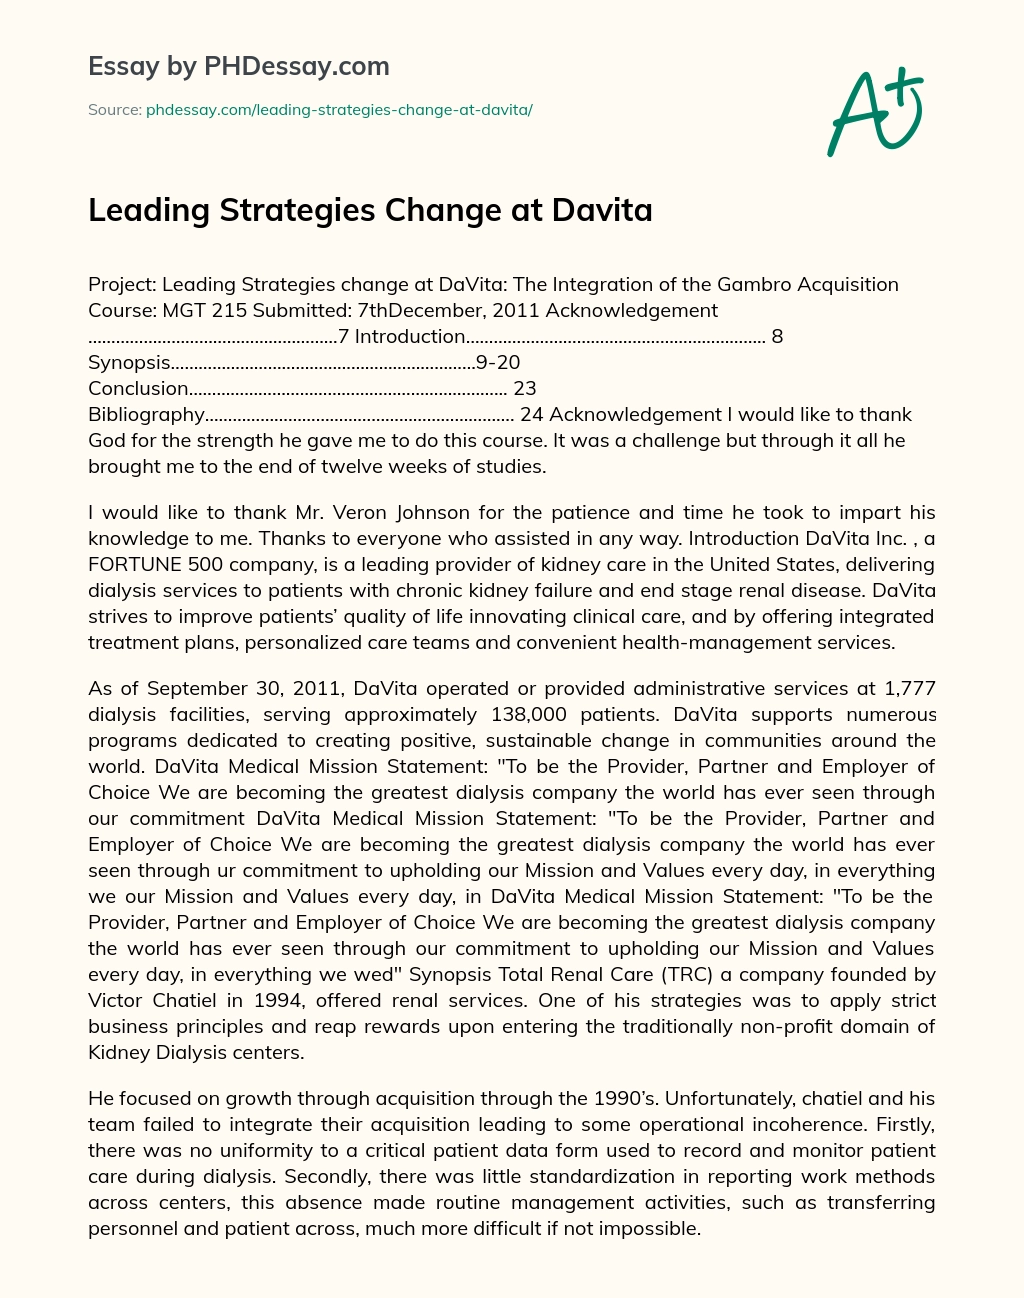 Leading Strategies Change at Davita essay